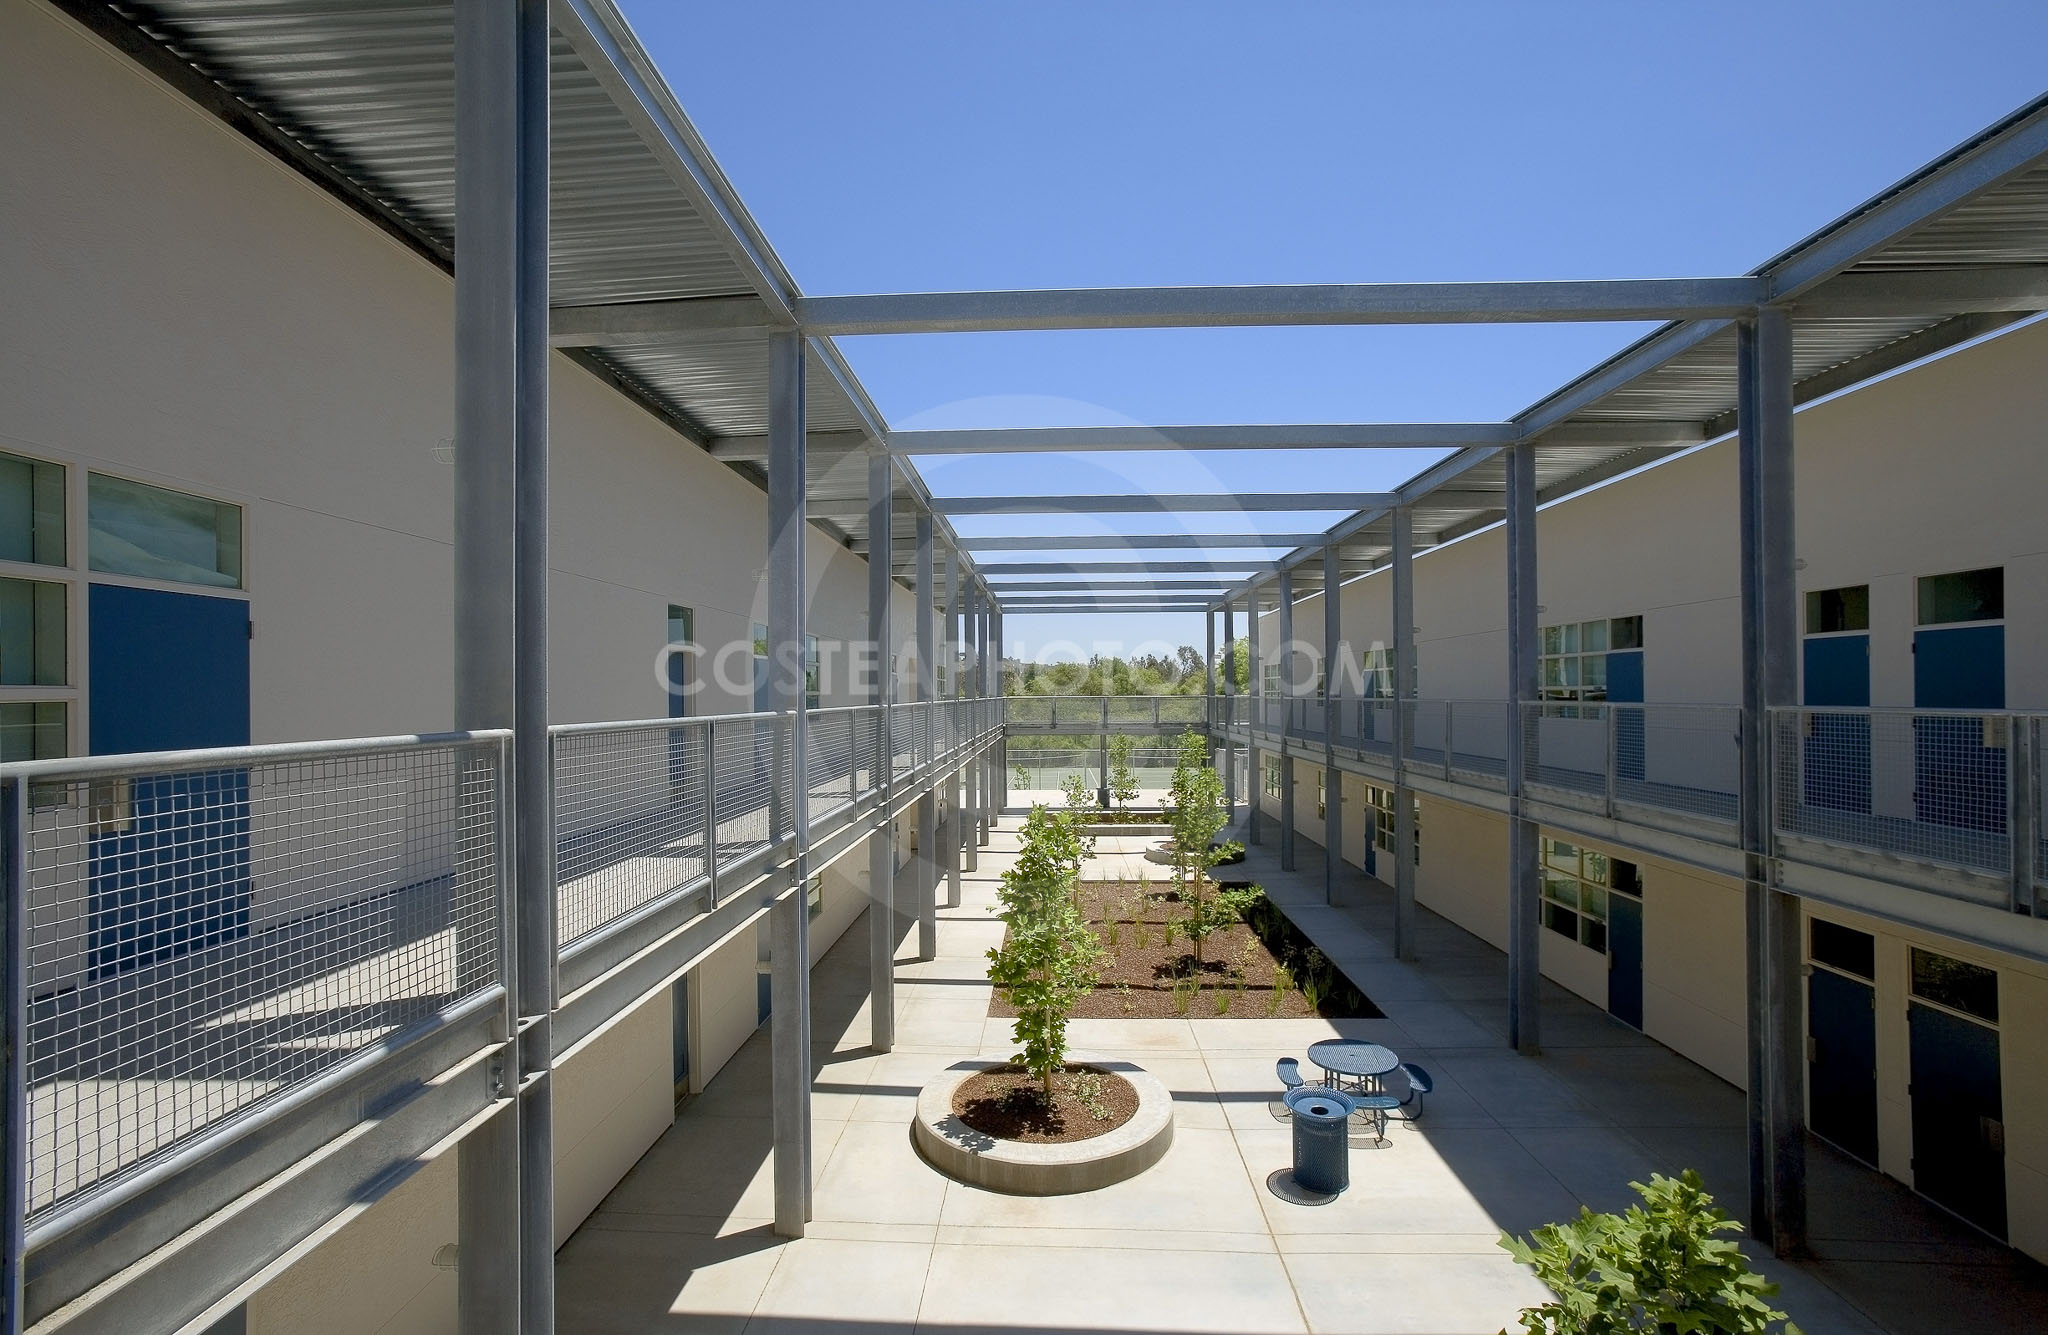 Classroom bldg courtyard 1